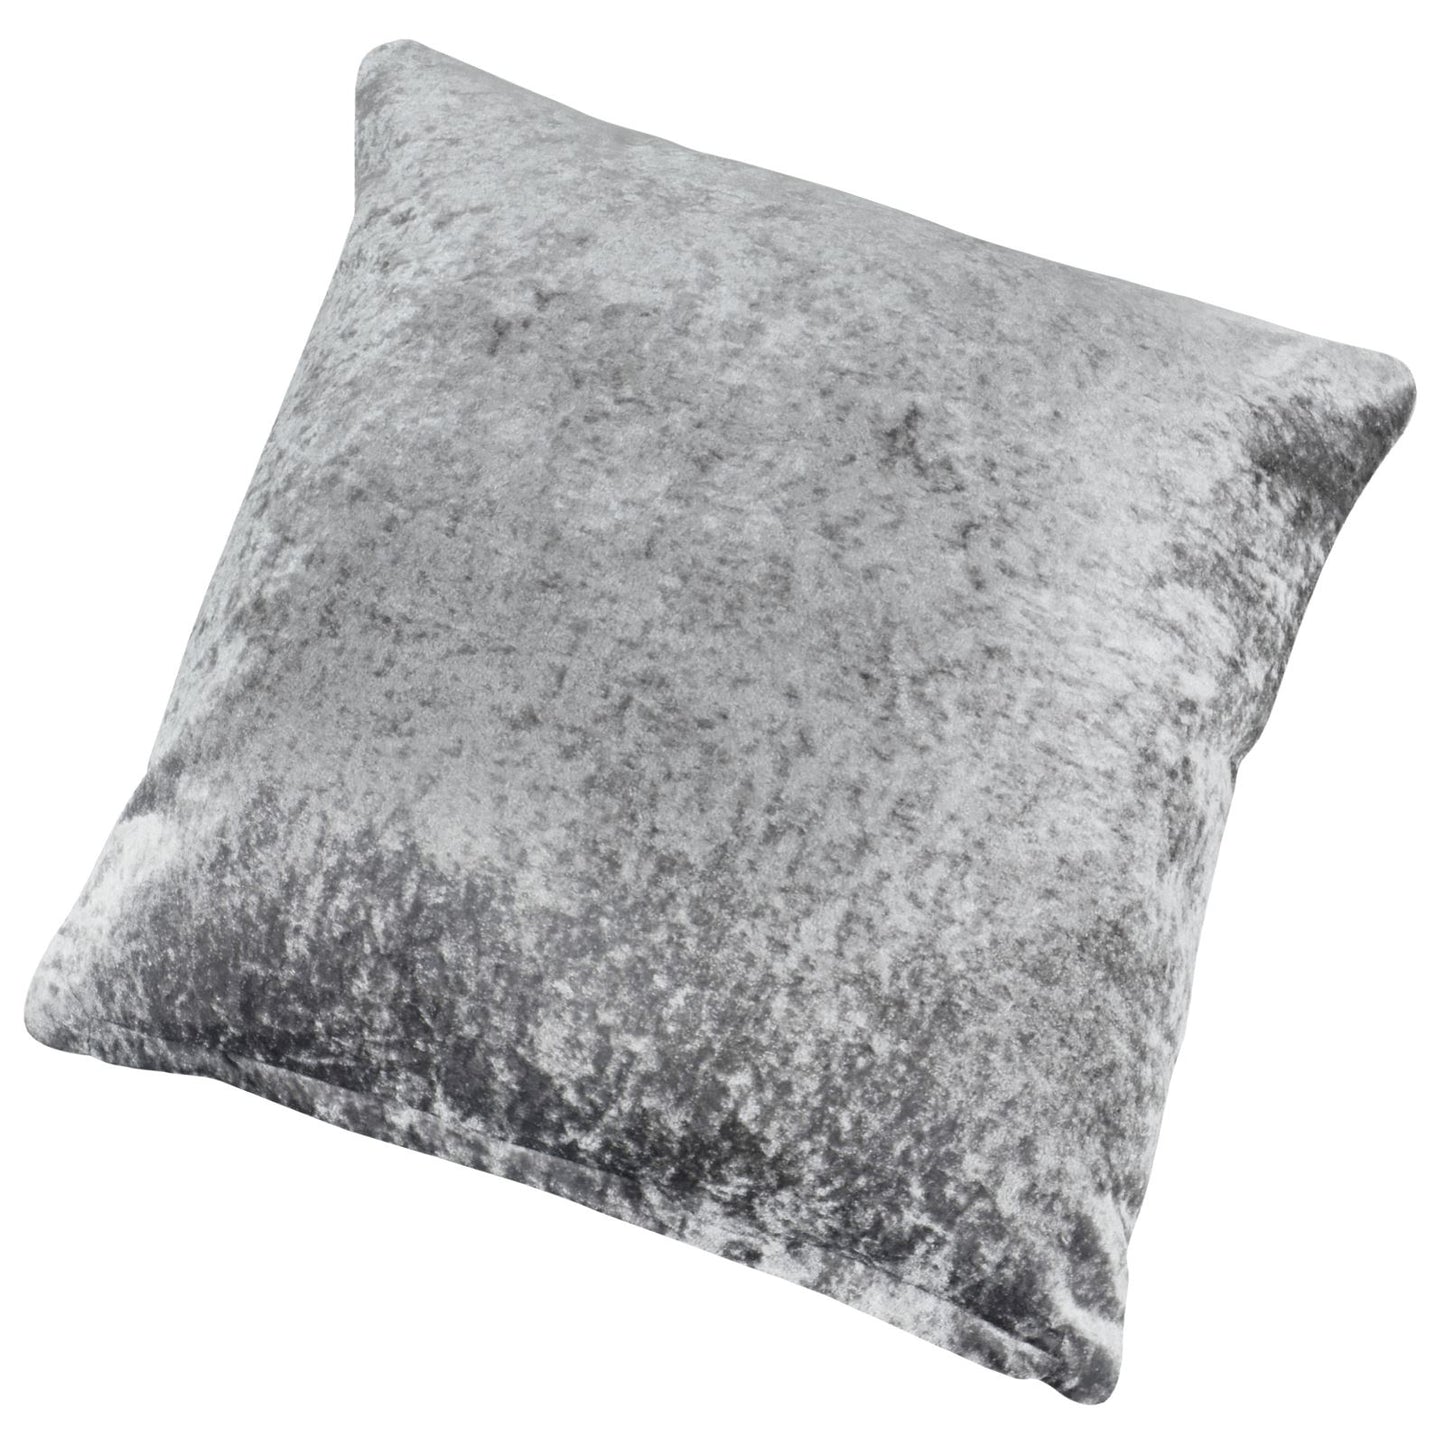 2 Pack Wavy Design Reversible Crushed Velvet 18" Cushion Cover Grey